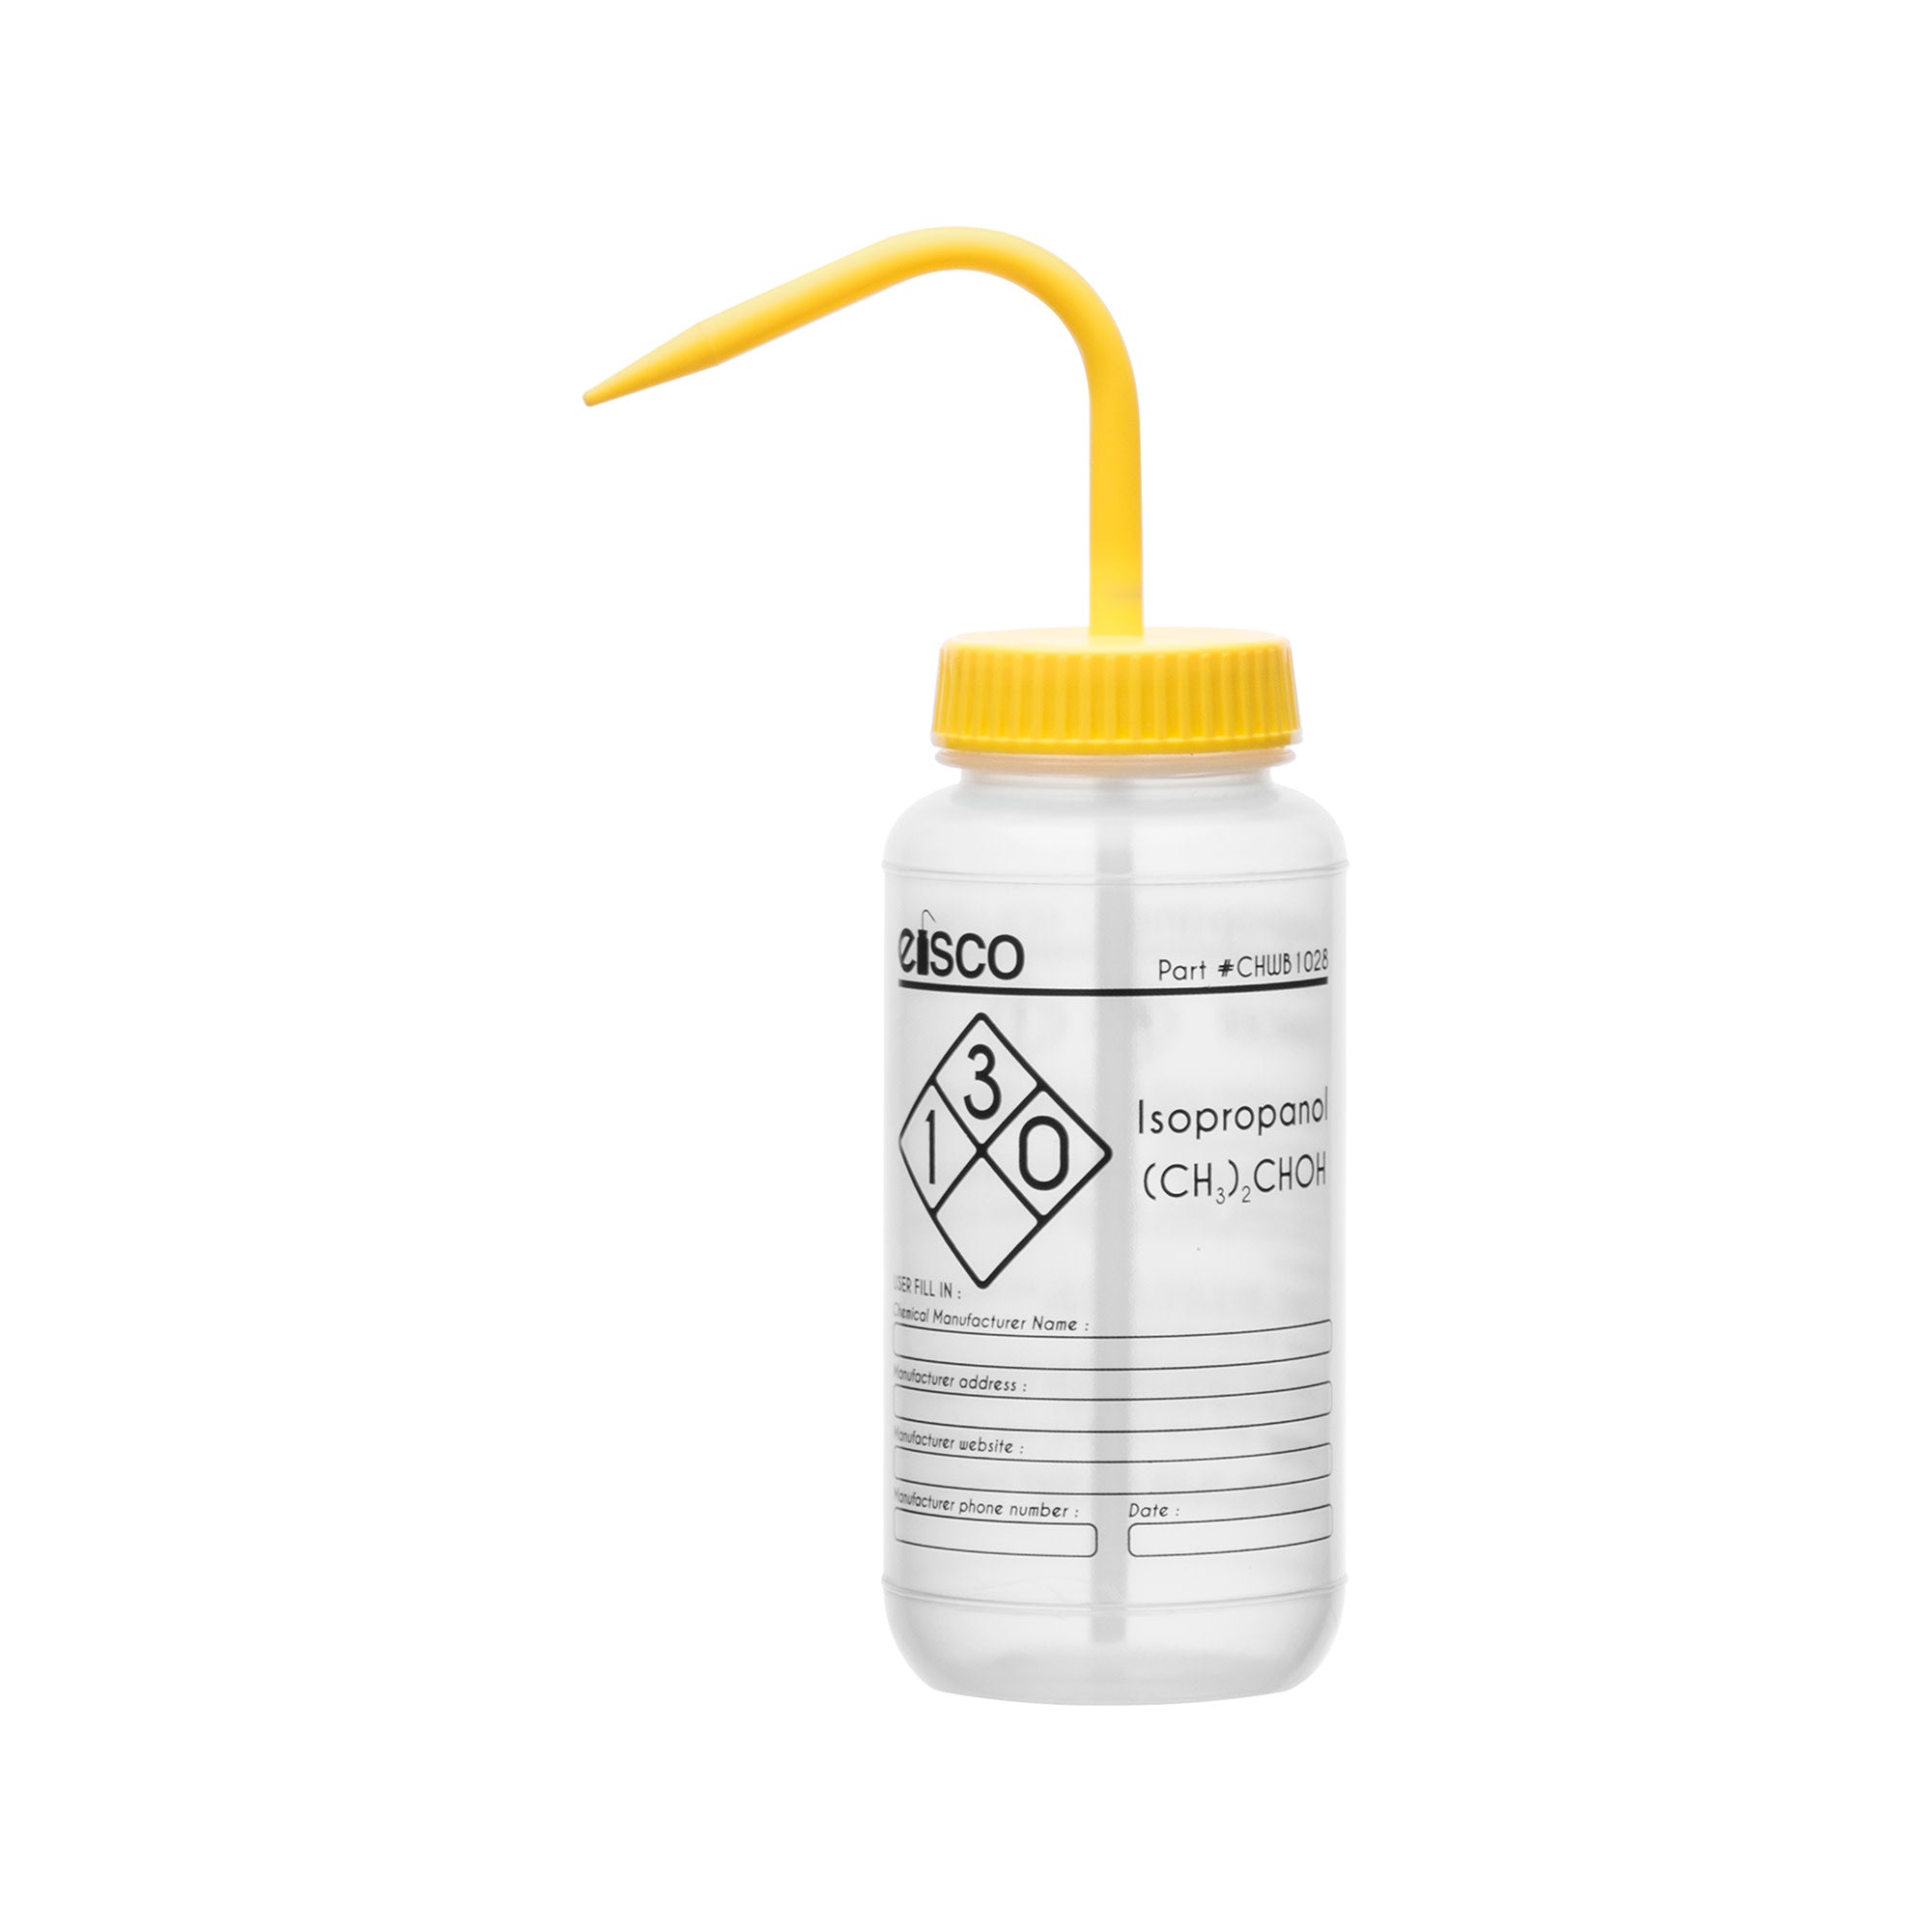 Performance Plastic Wash Bottle, Isopropanolr, 500 ml - Labeled (1 Color)